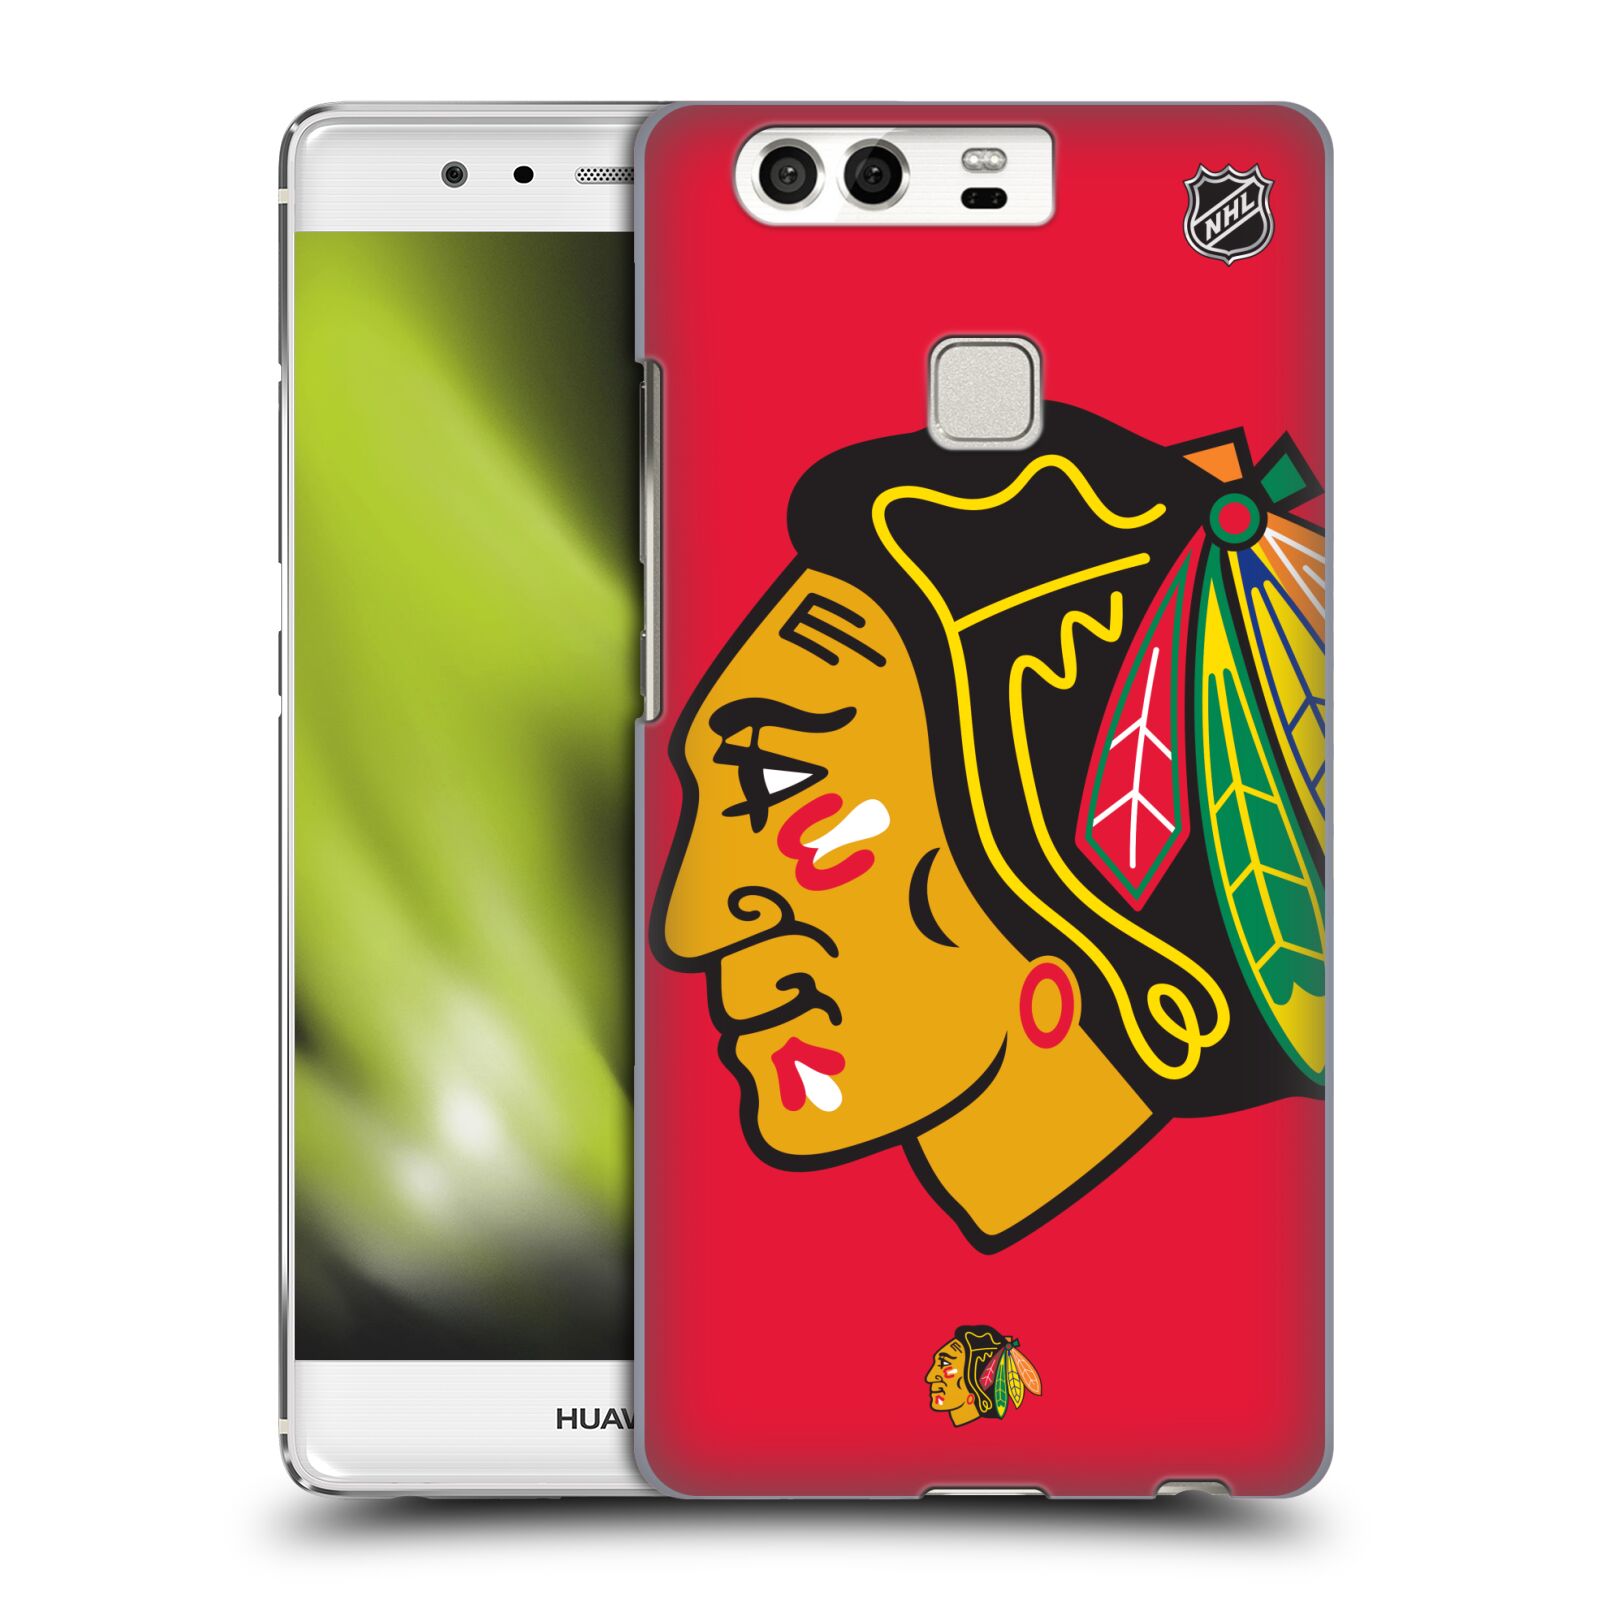 Pouzdro na mobil Huawei P9 / P9 DUAL SIM - HEAD CASE - Hokej NHL - Chicago Blackhawks - Velký znak